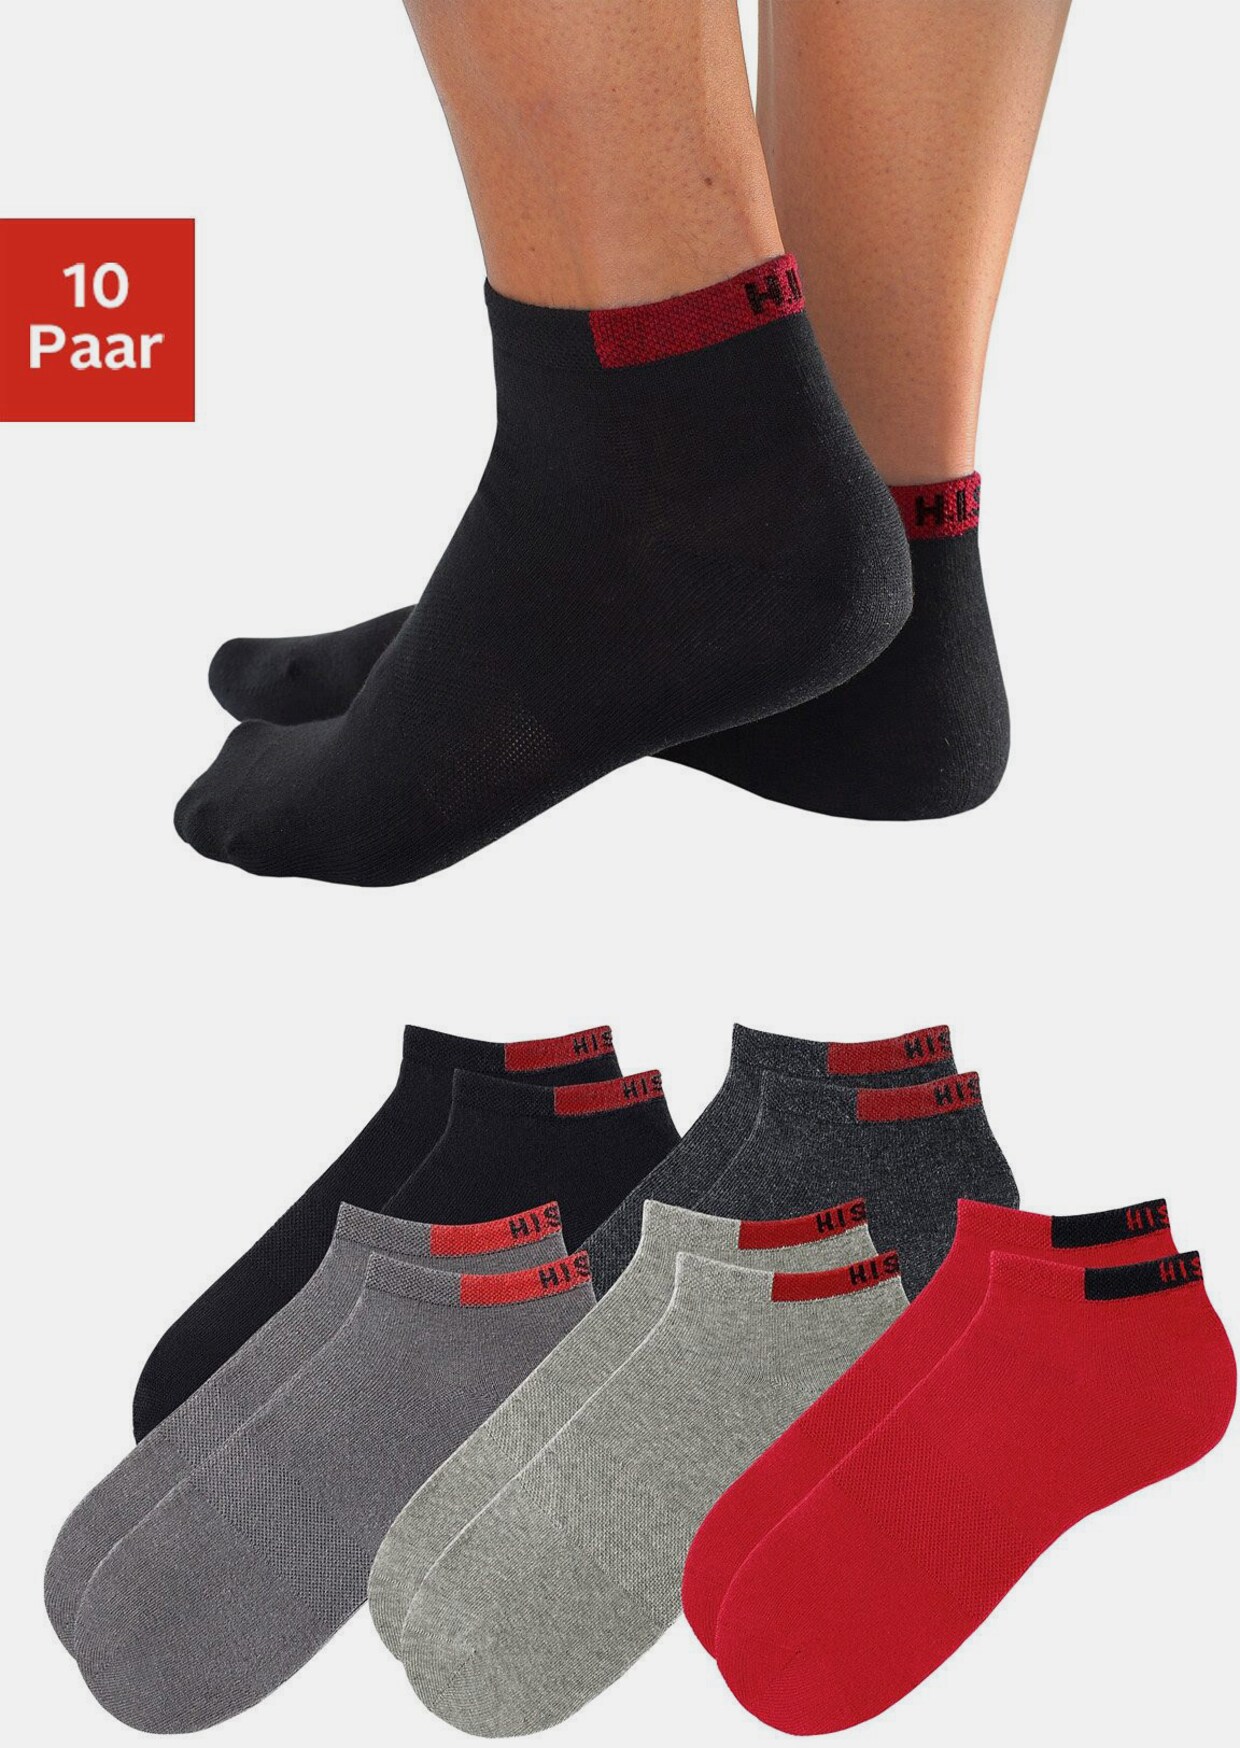 H.I.S Sneakersocken - 2x schwarz, 2x grau, 2x rot, 2x anthrazit-meliert, 2x hellgrau-meliert